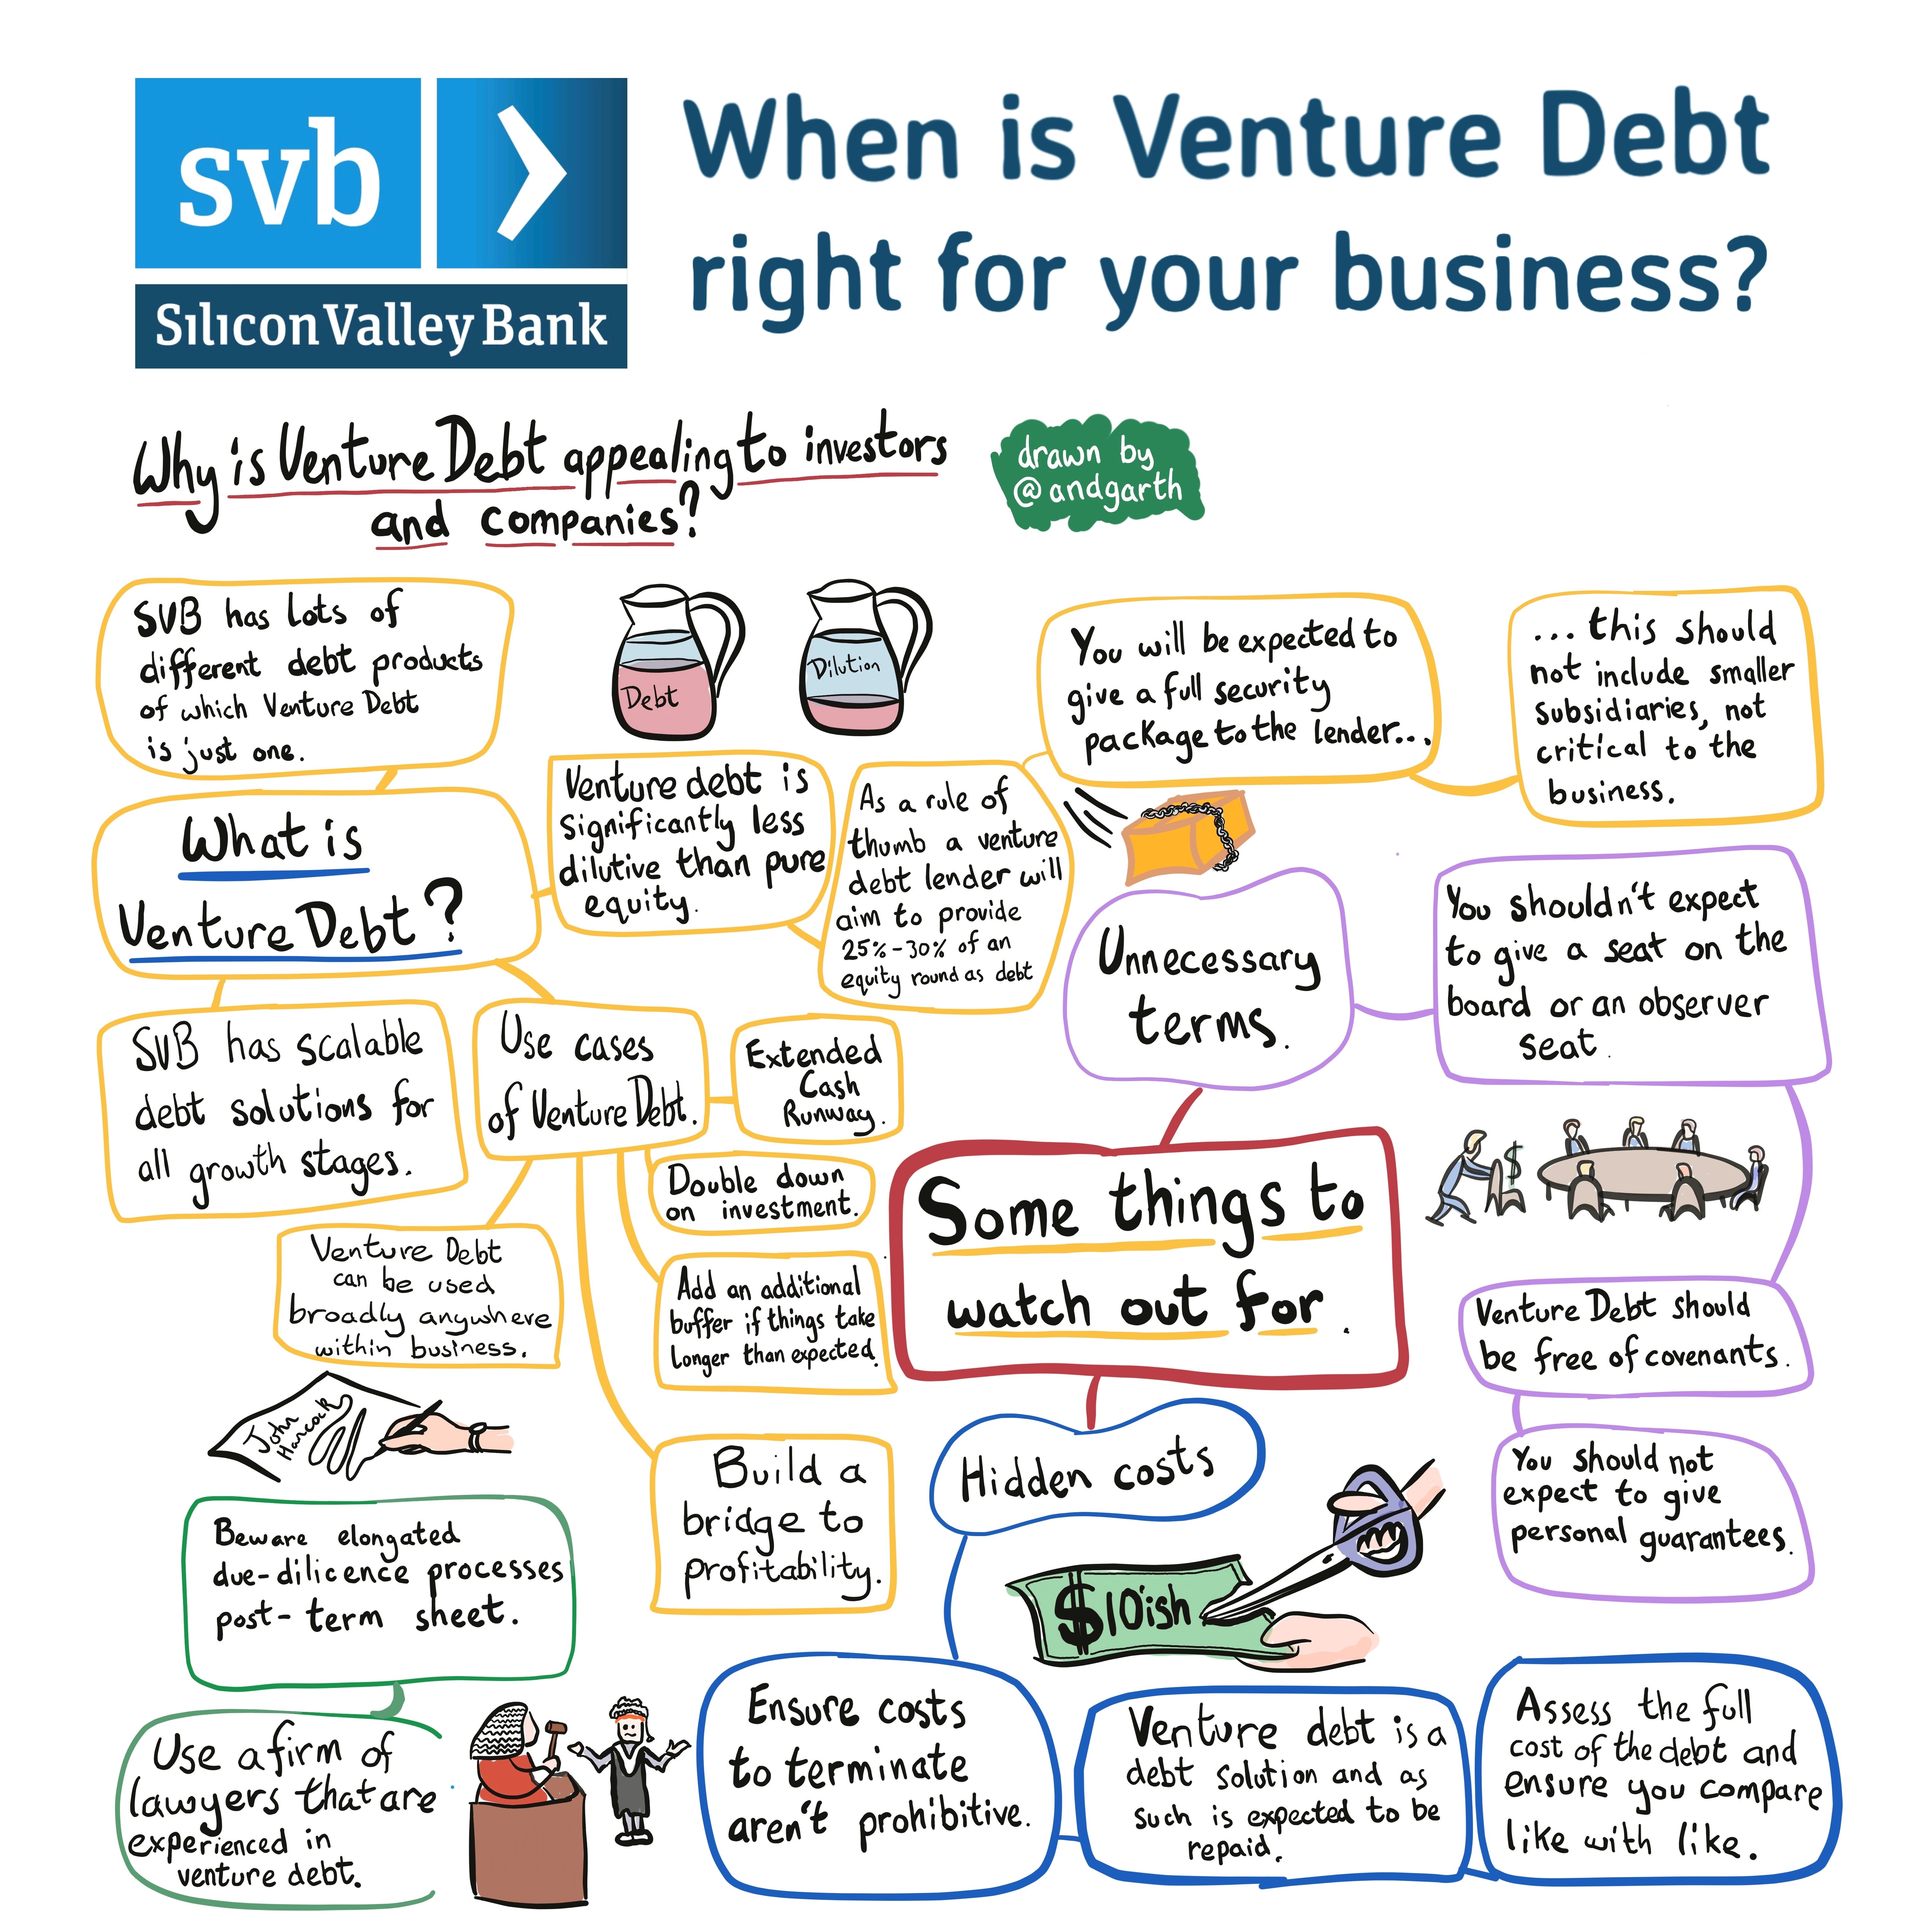 Where can one find venture debt case studies?